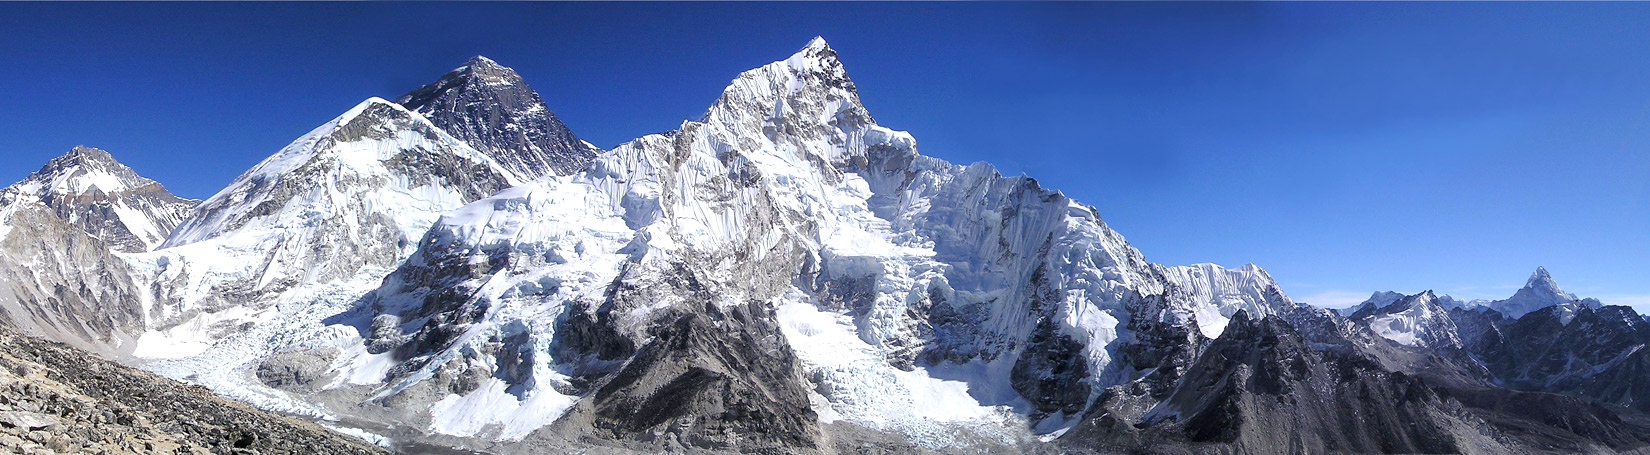 Everest Himalayan Range From Kalapathar 